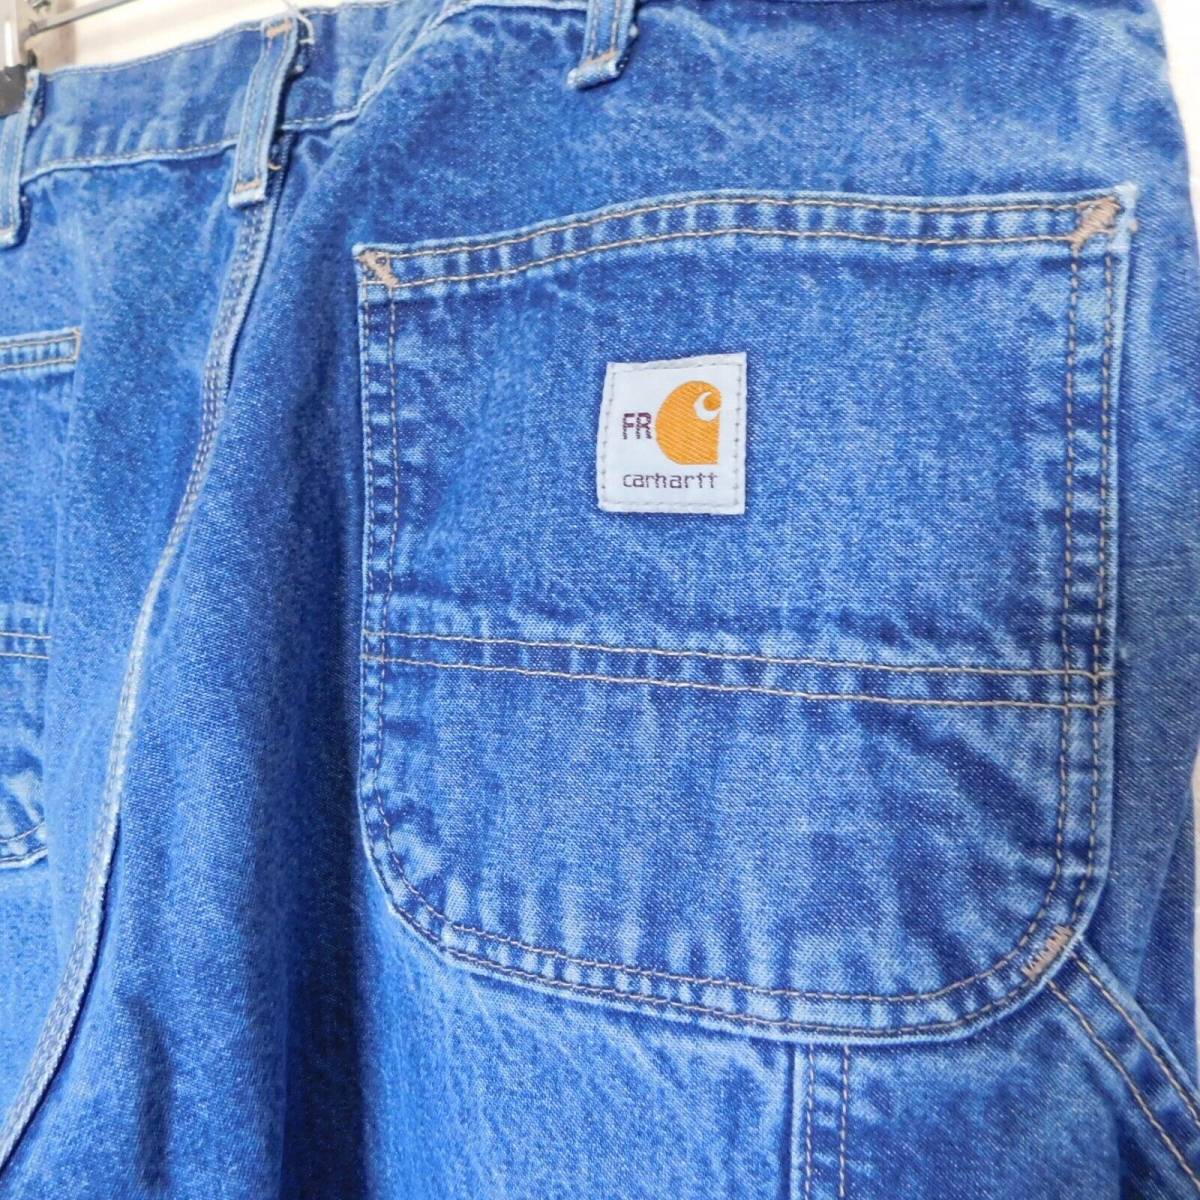 Carhartt FR NFPA 2112 Workwear Pants Pocket Denim FRB 13 Blue Jeans Size 36x32 海外 即決 8